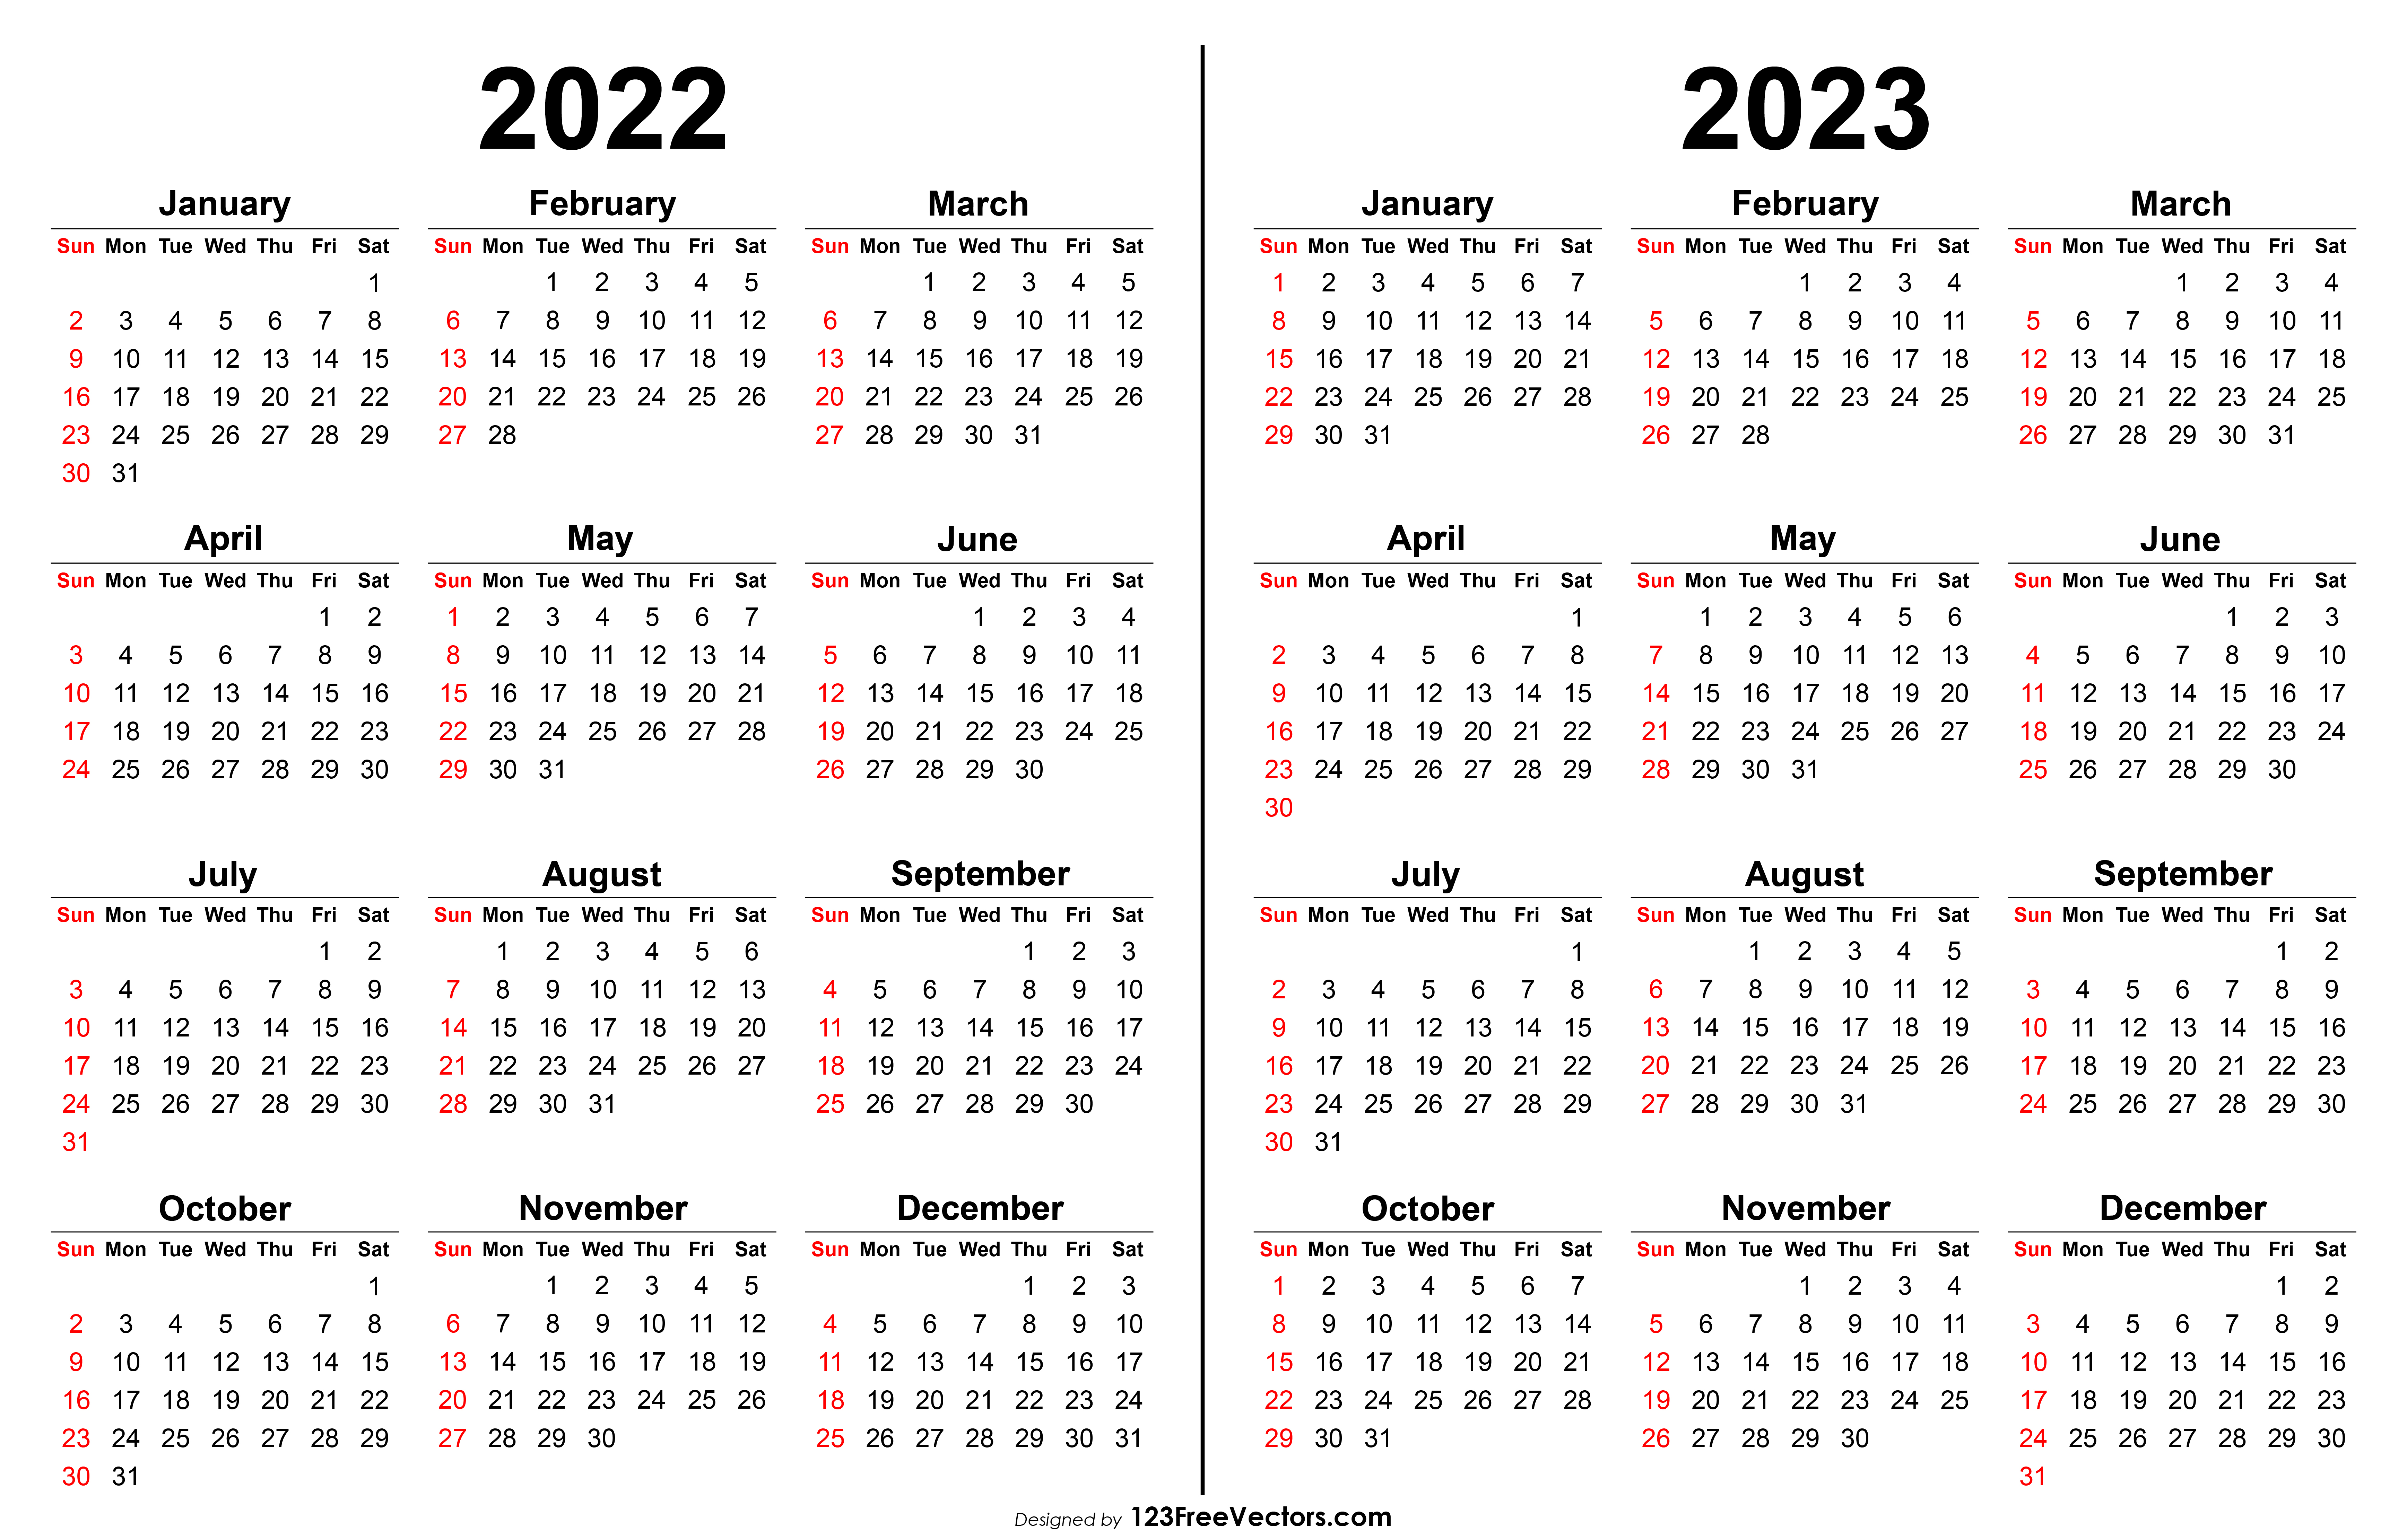 Photoshop Calendar Template 2022 Free 2022 2023 Calendar